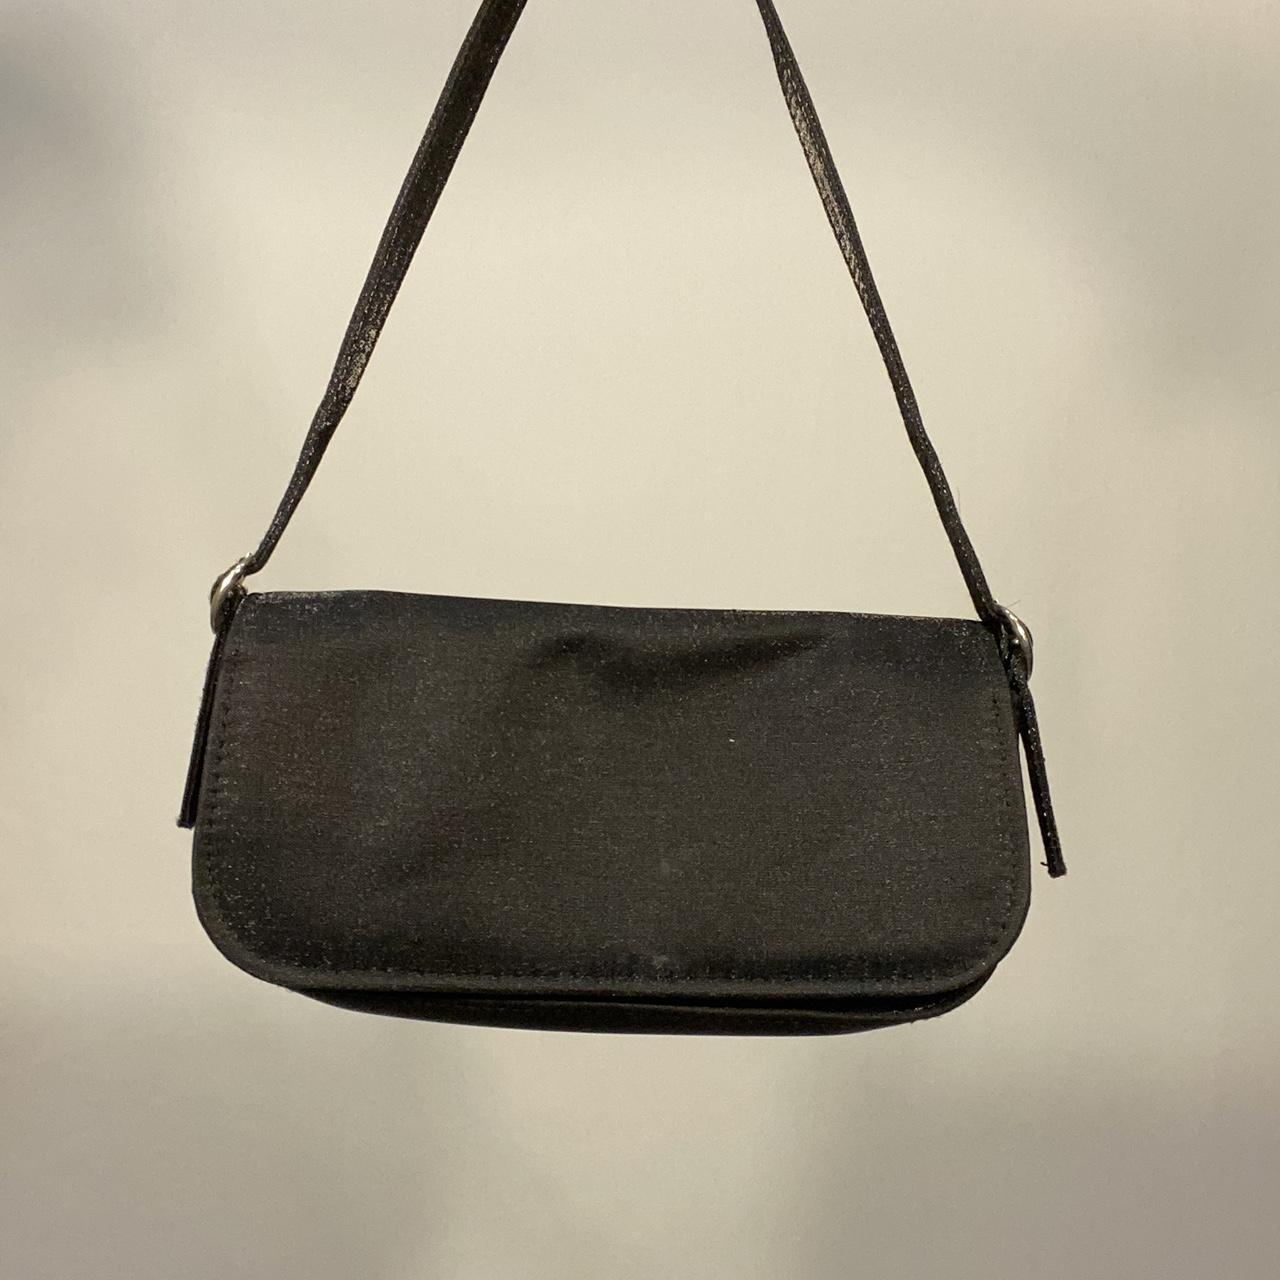 Y2k mini bag 🖤 : Amazing 2000s black purse! With... - Depop